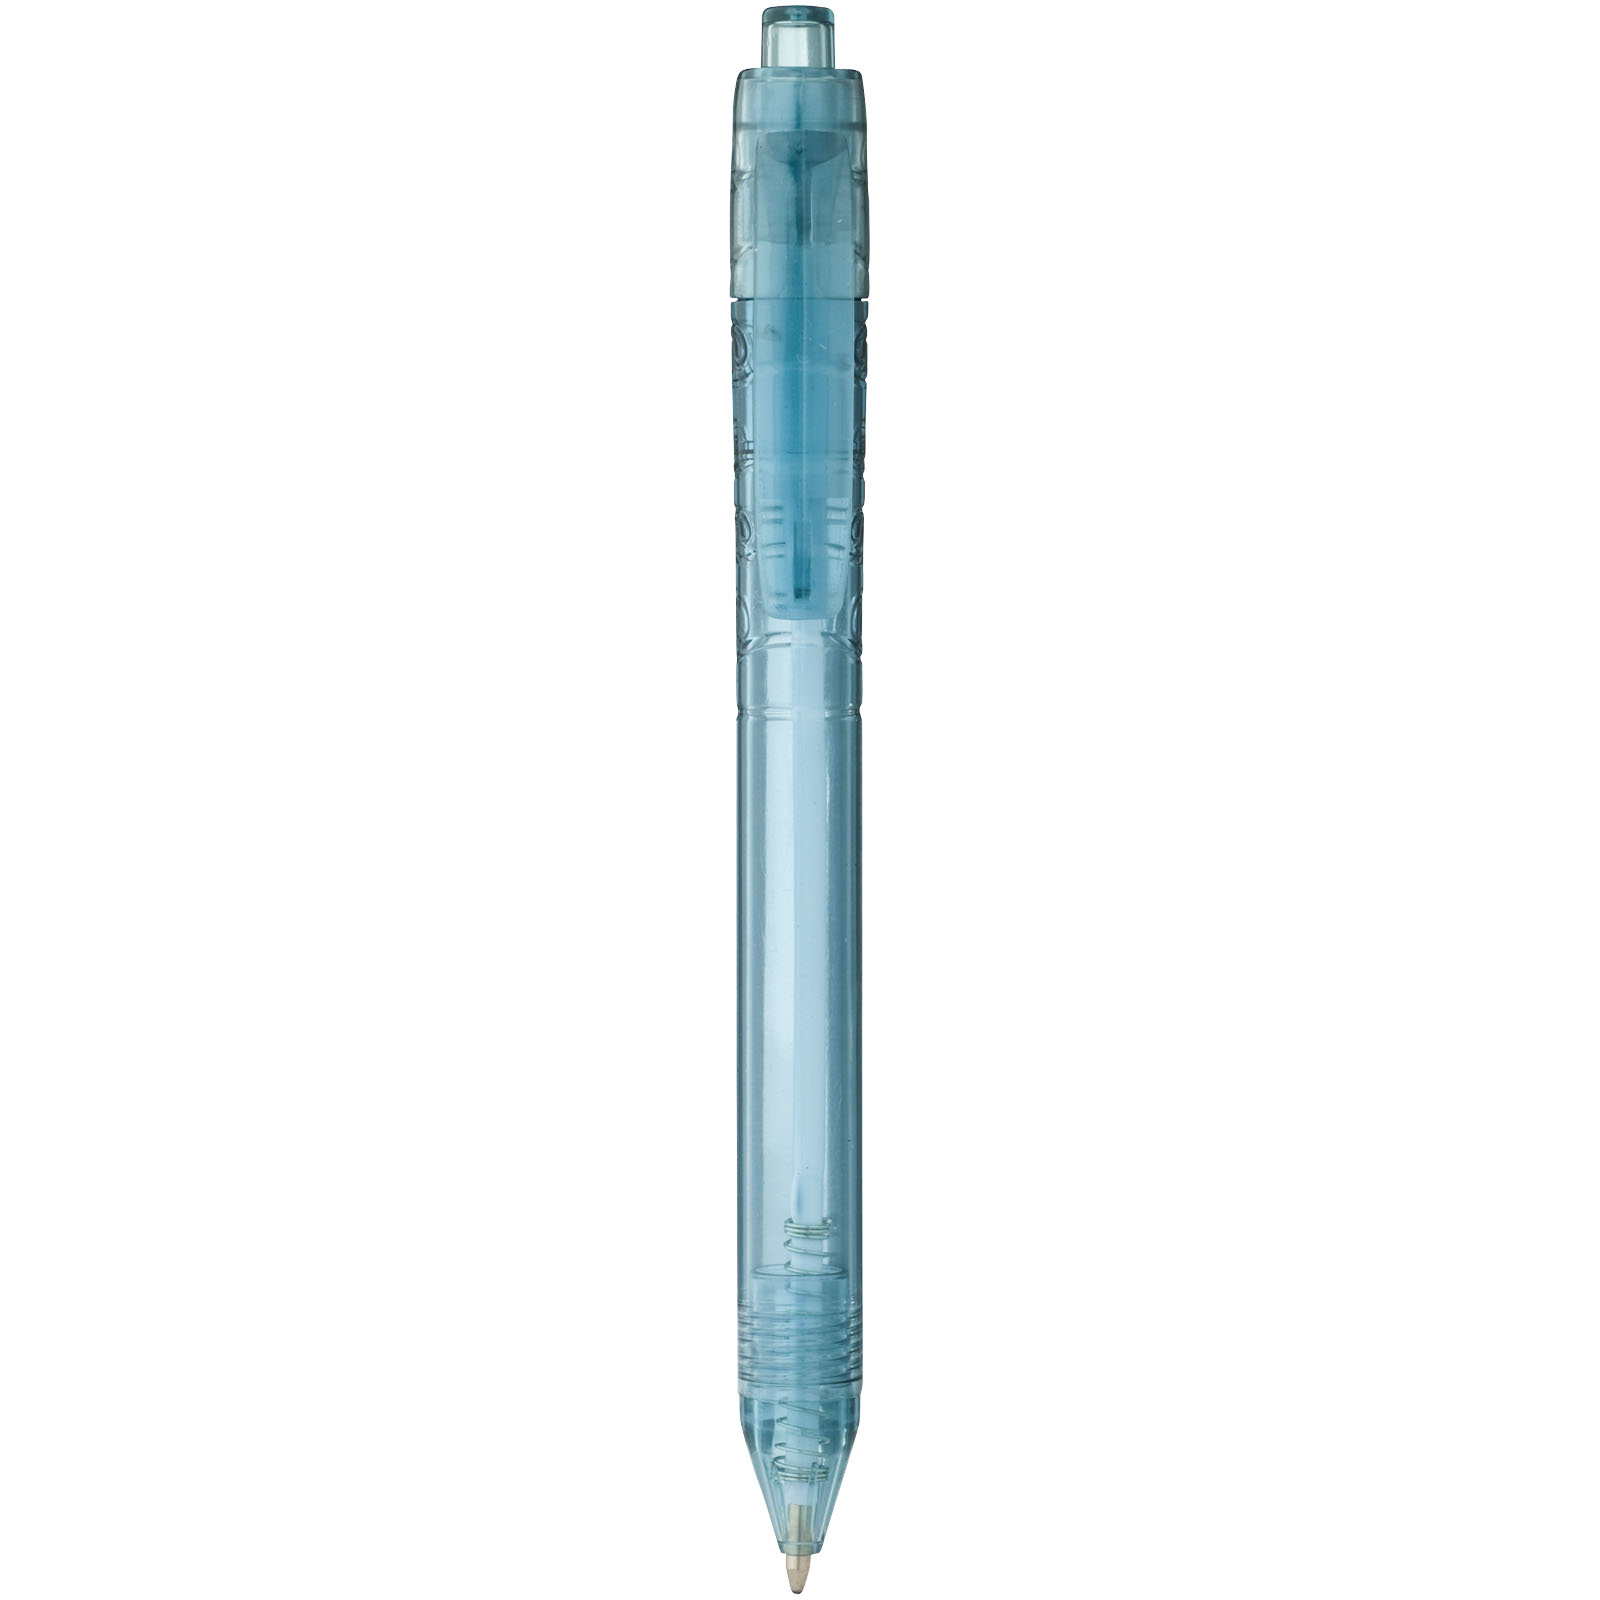 Advertising Ballpoint Pens - Vancouver recycled PET ballpoint pen